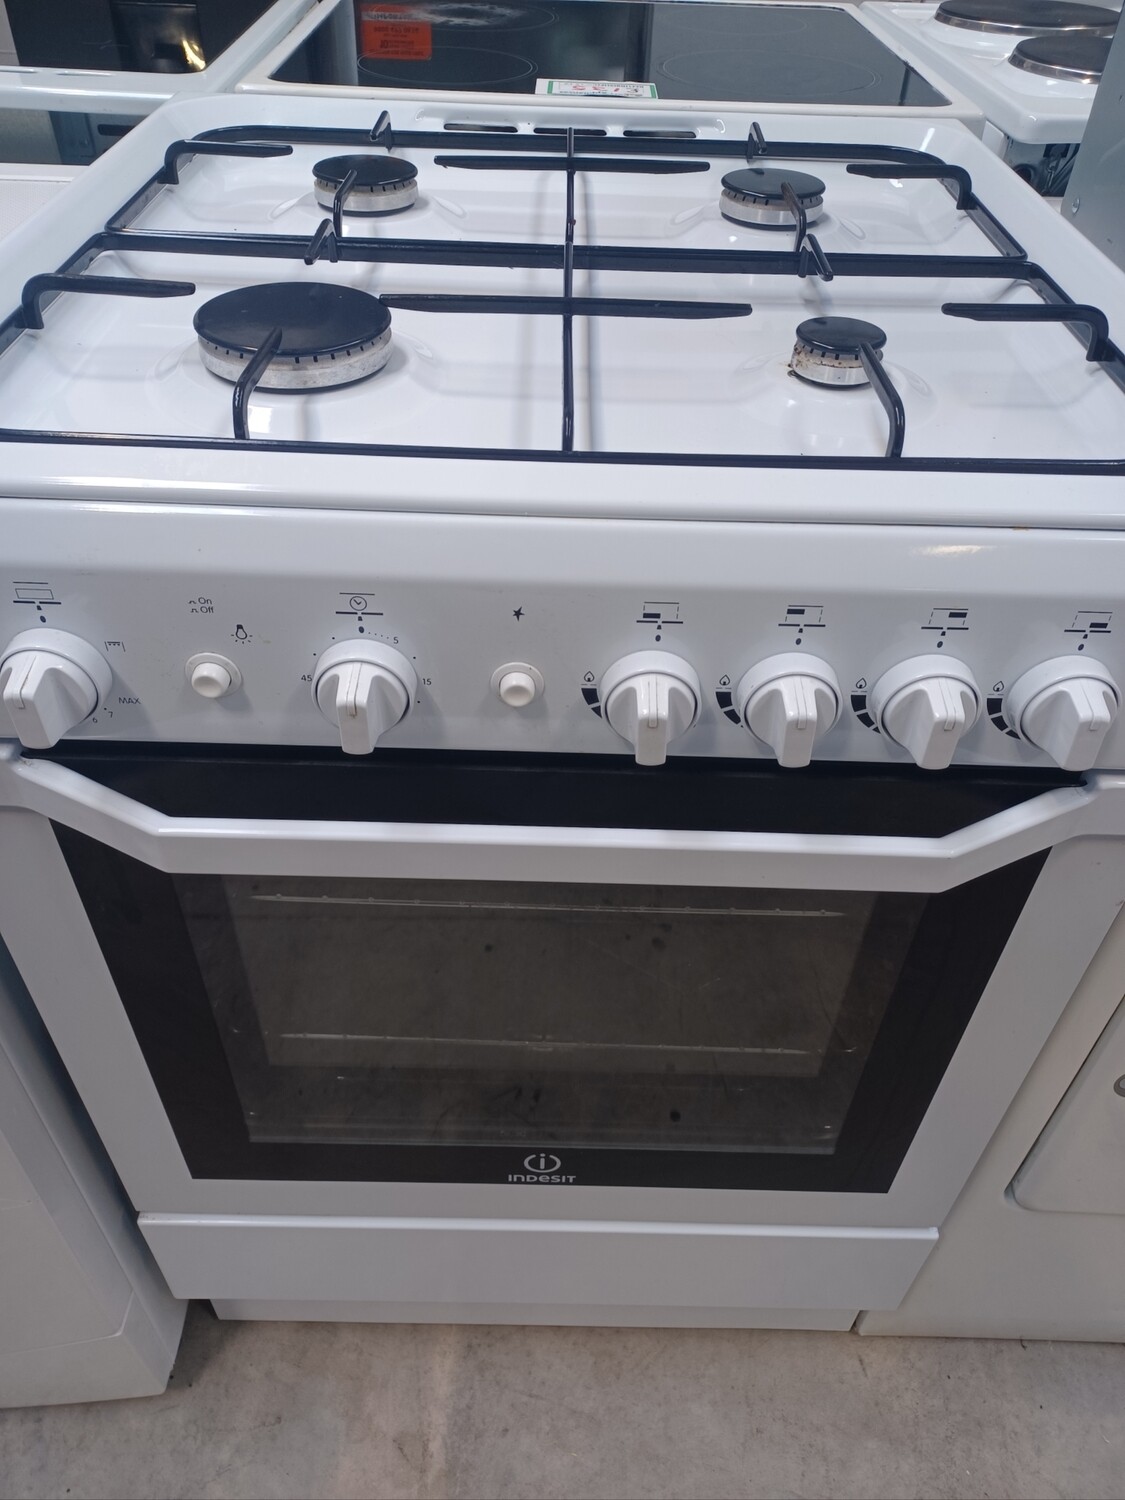 Indesit 60cm Gas Cooker In White Refurbished 